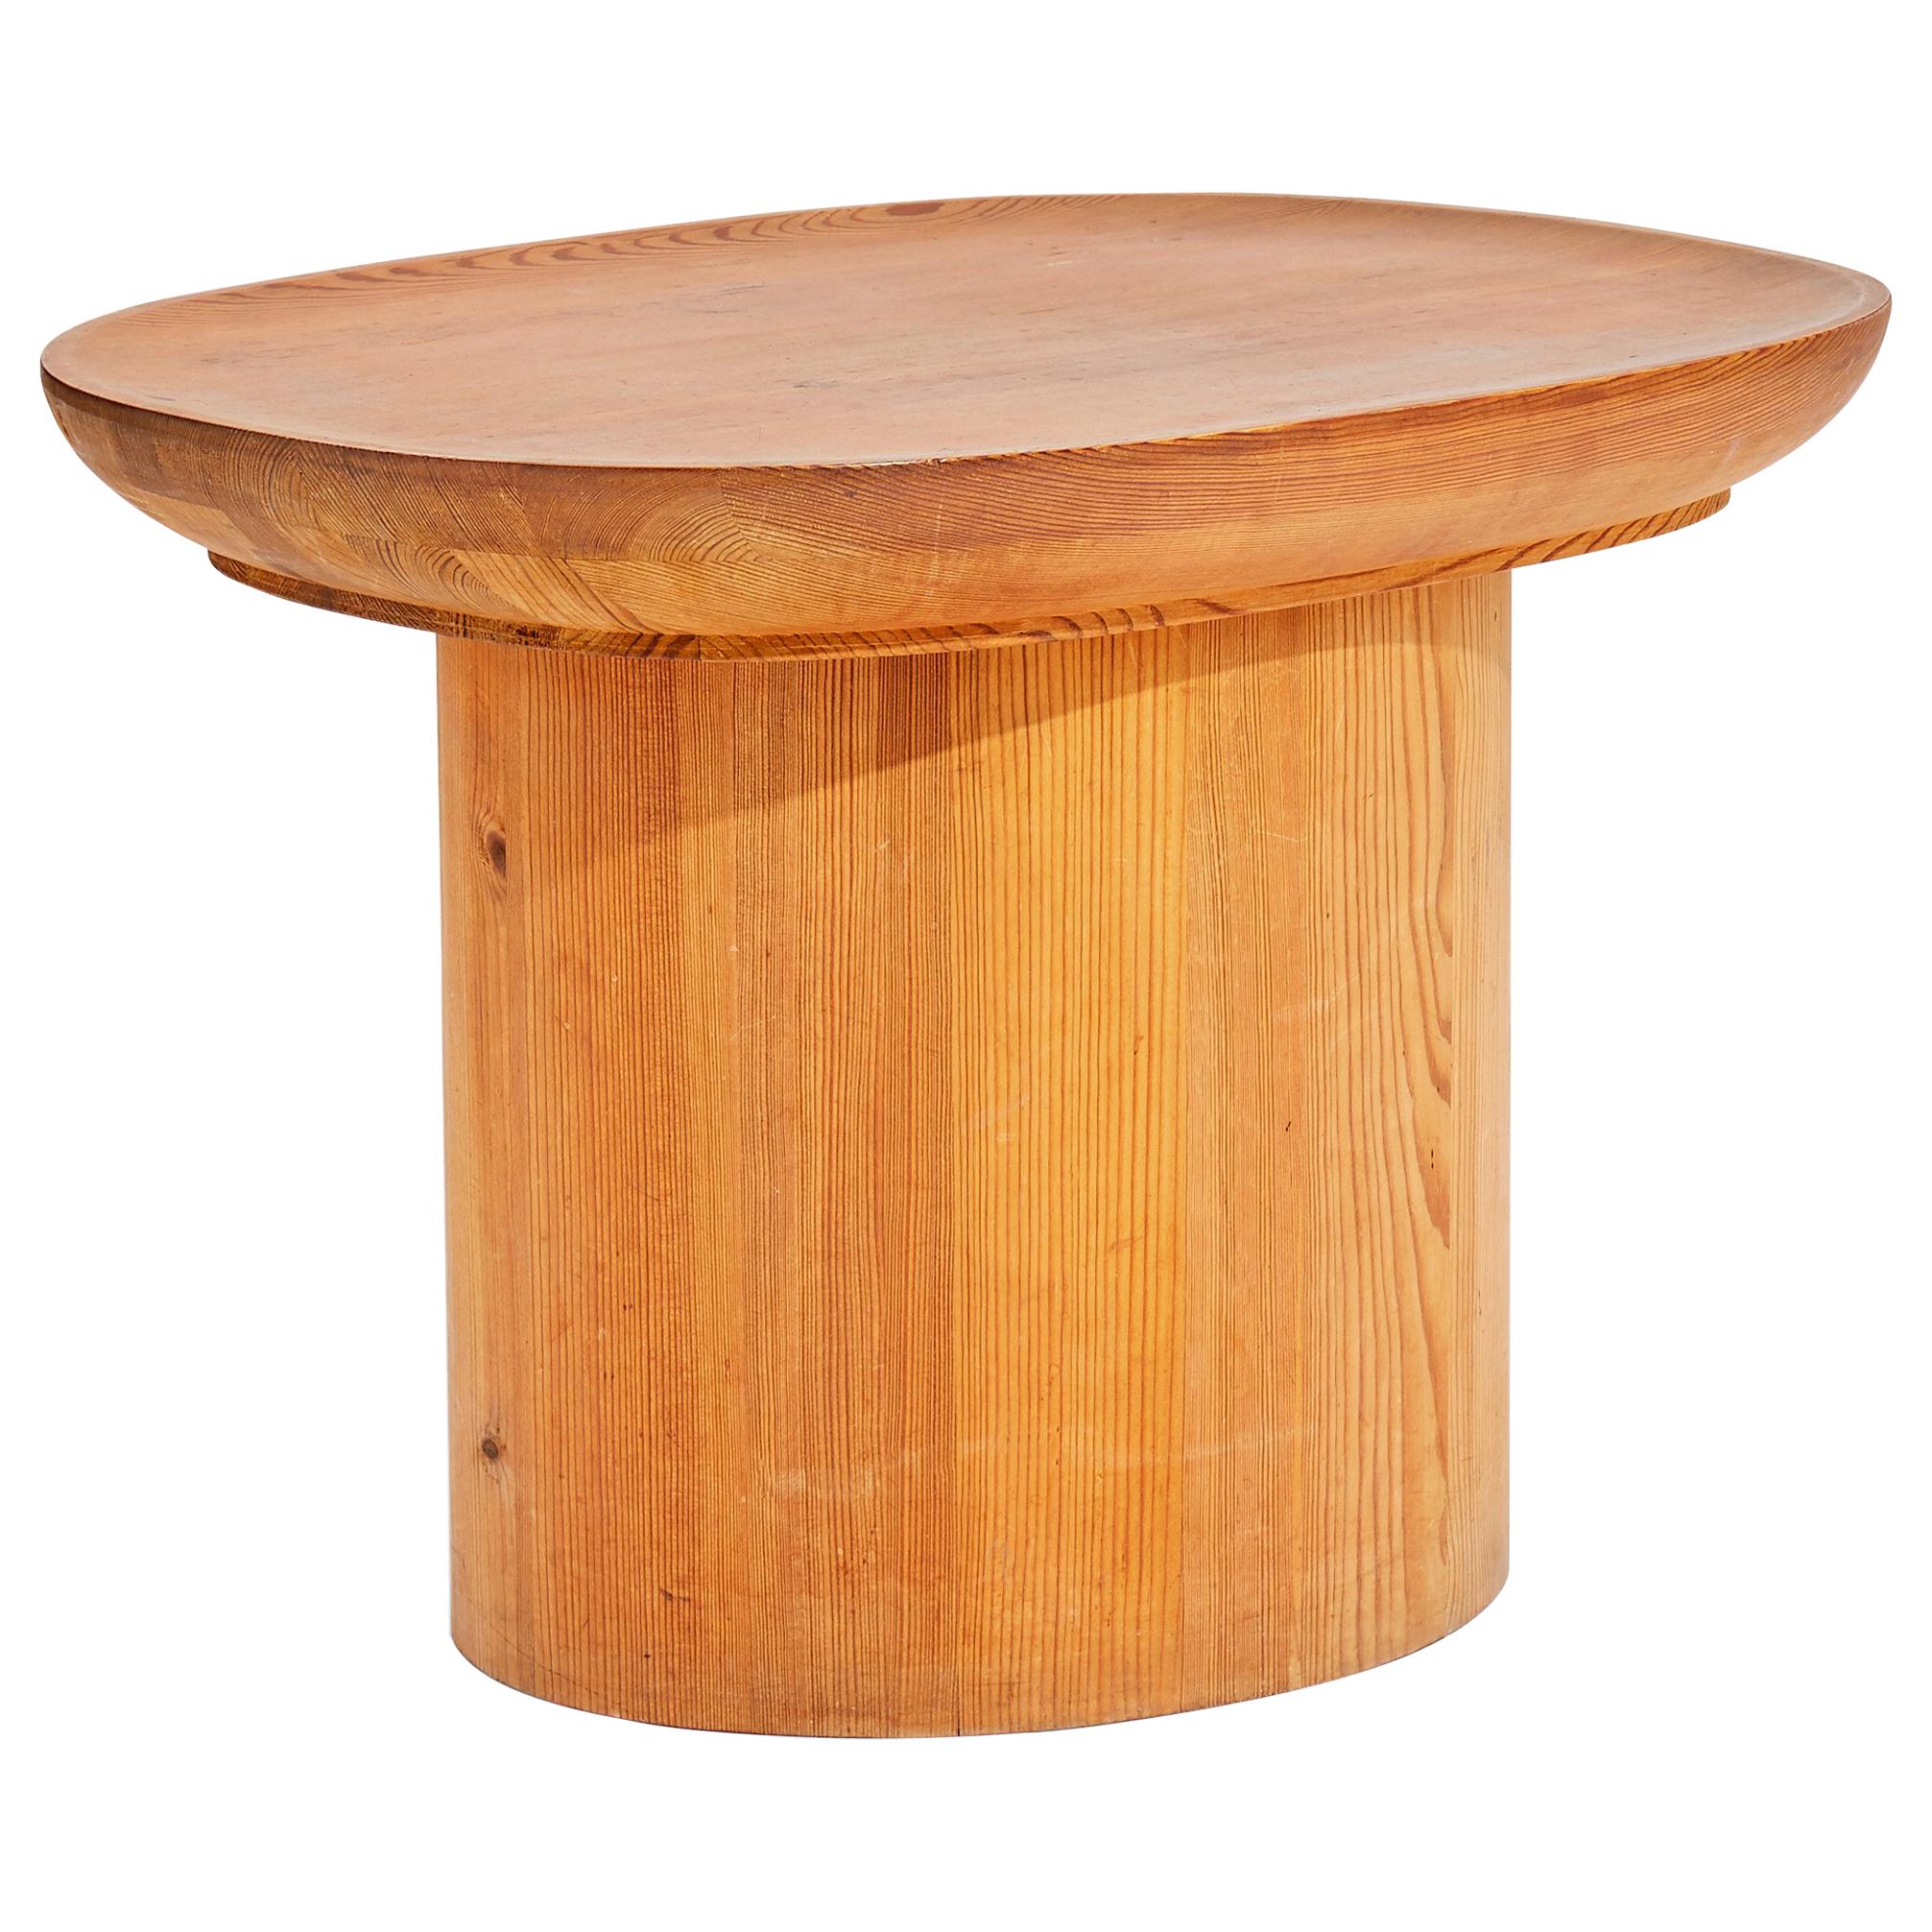 Axel Einar Hjorth Pine ‘Uto’ Table for Nordiska Kompaniet, Sweden 1930s